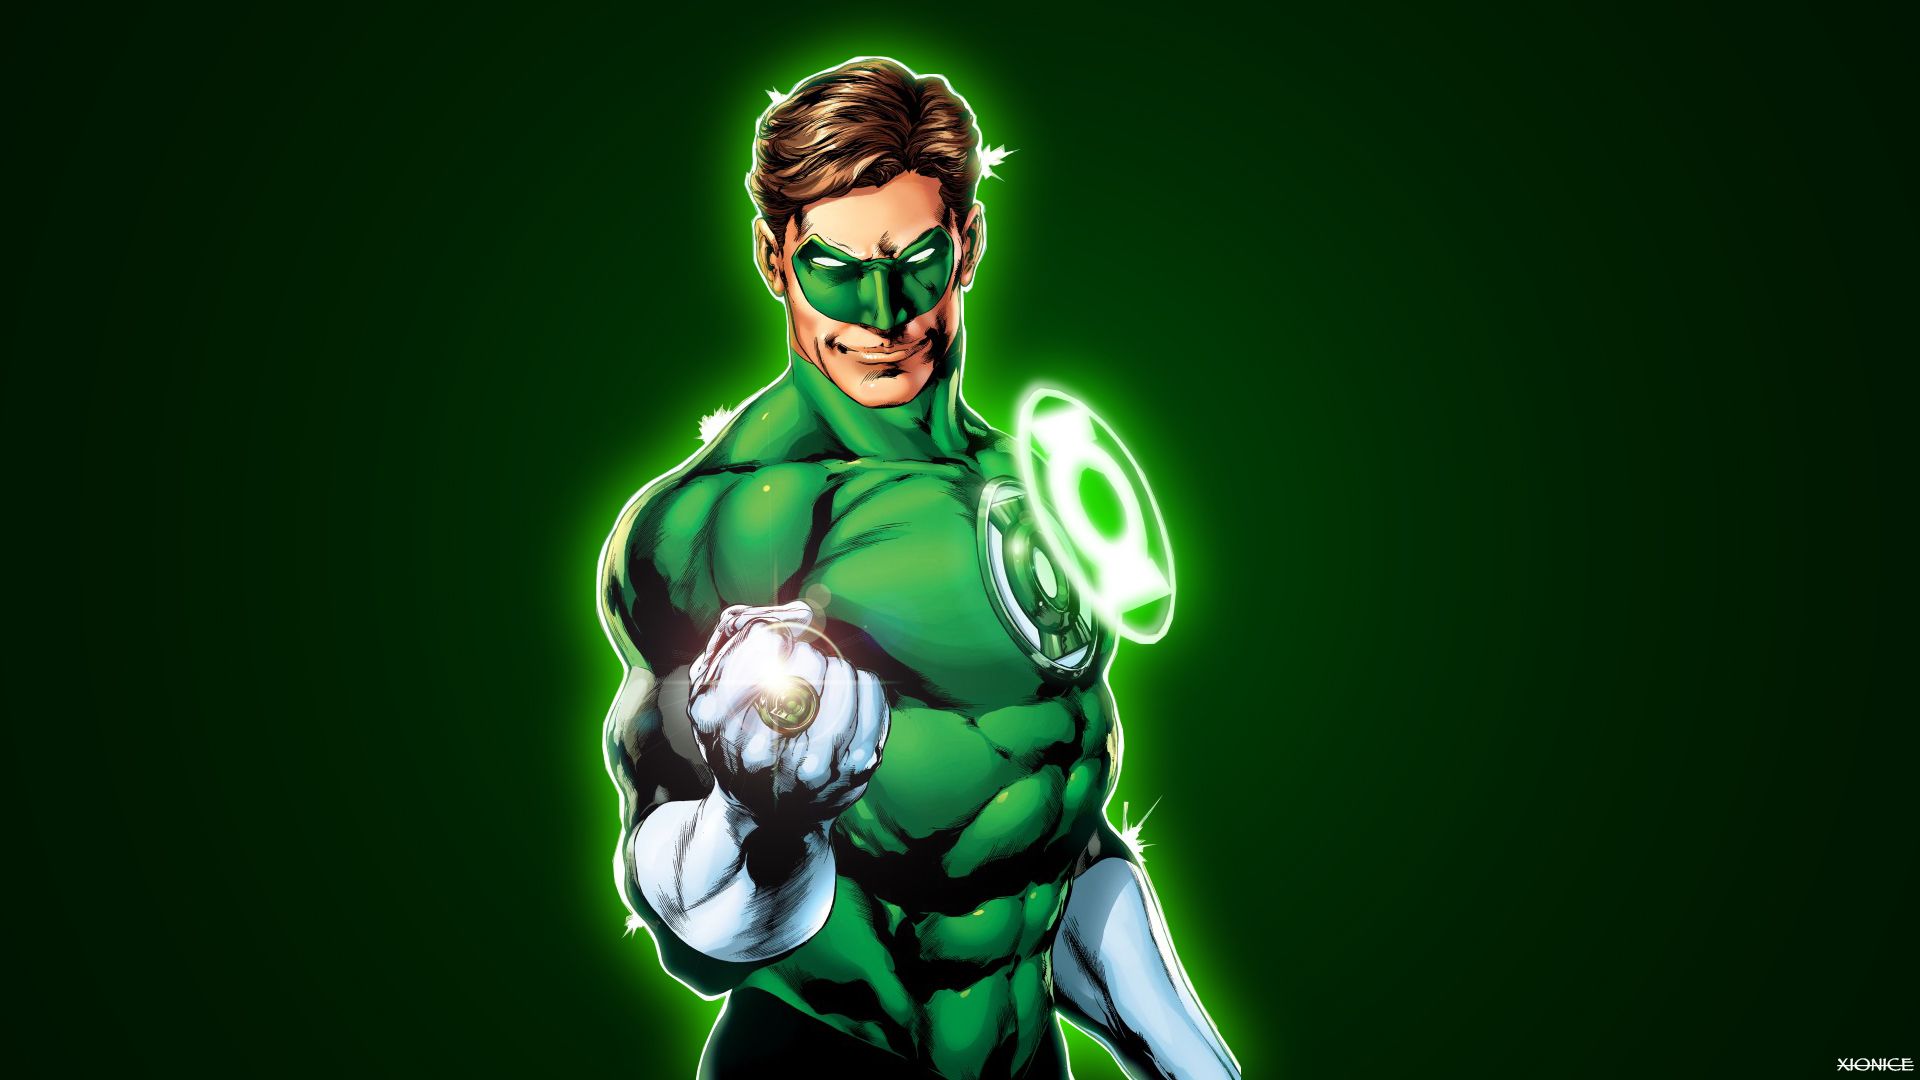 Green Lantern Hal Jordan Fictional Superhero Created In 1959